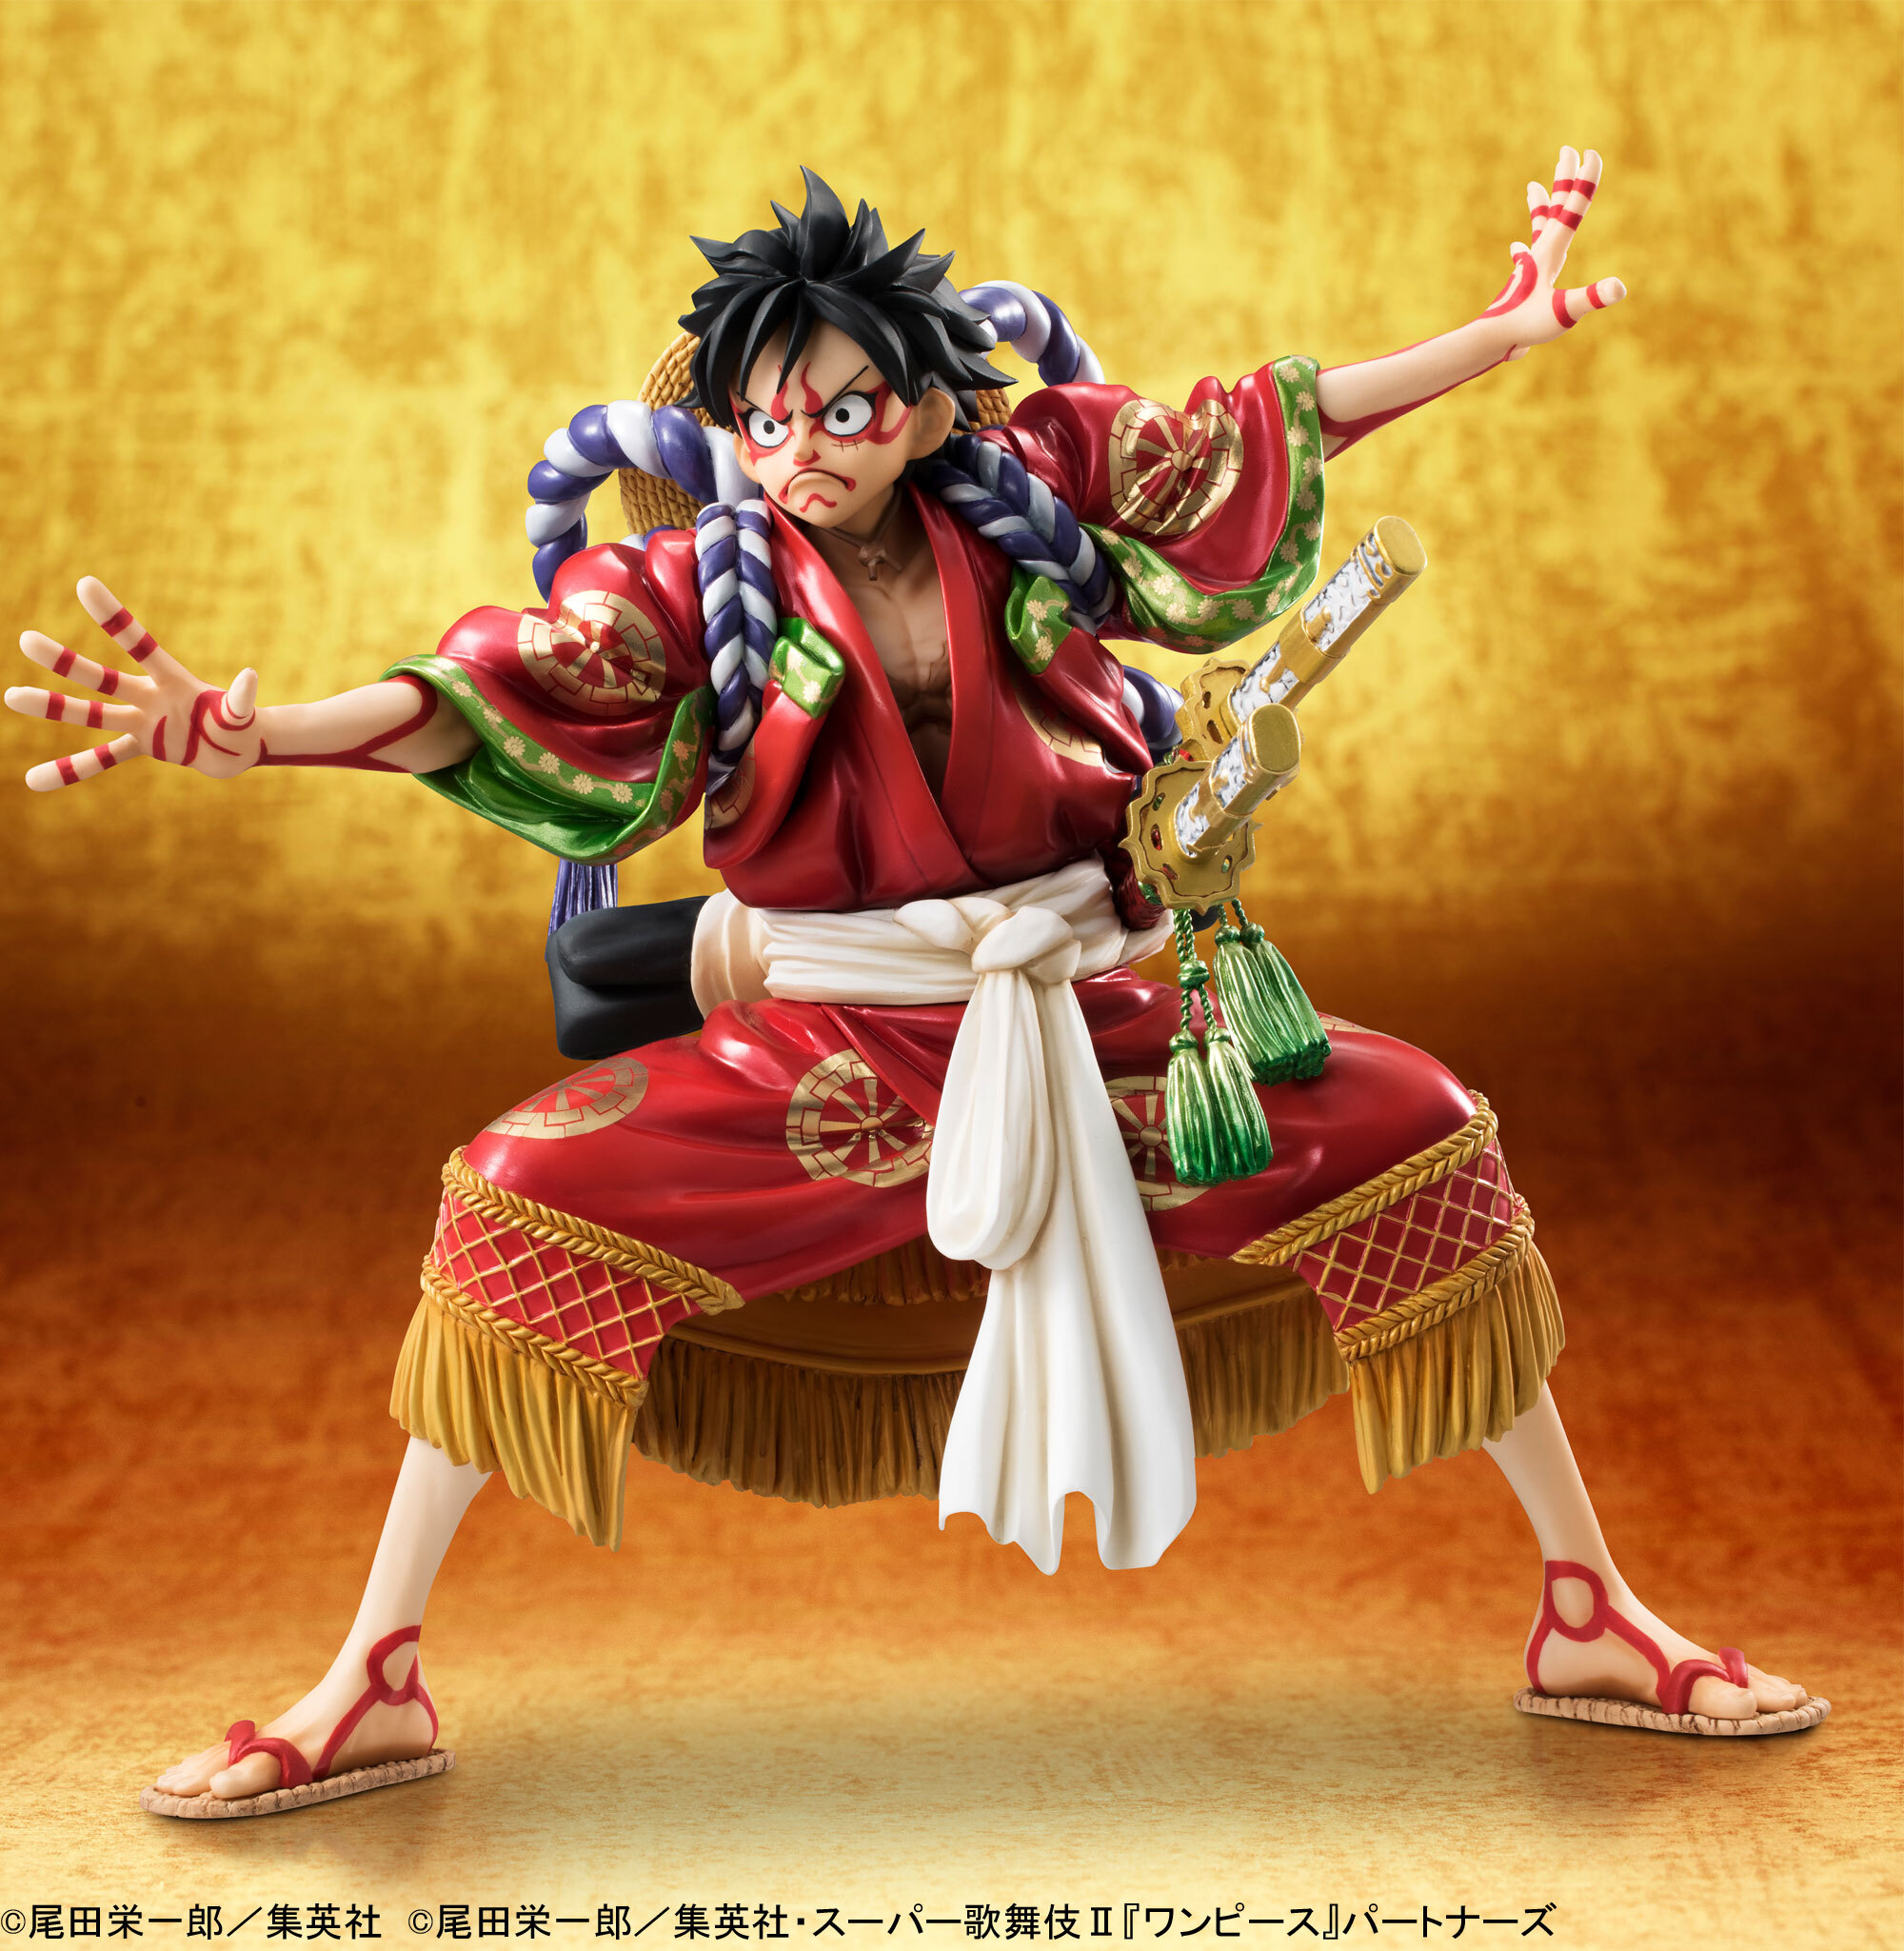 One Piece 歌舞伎 の 初 コラボフィギュア 歌舞伎衣装で大見得を切るルフィを立体化 株式会社バンダイ ネット戦略室のプレスリリース